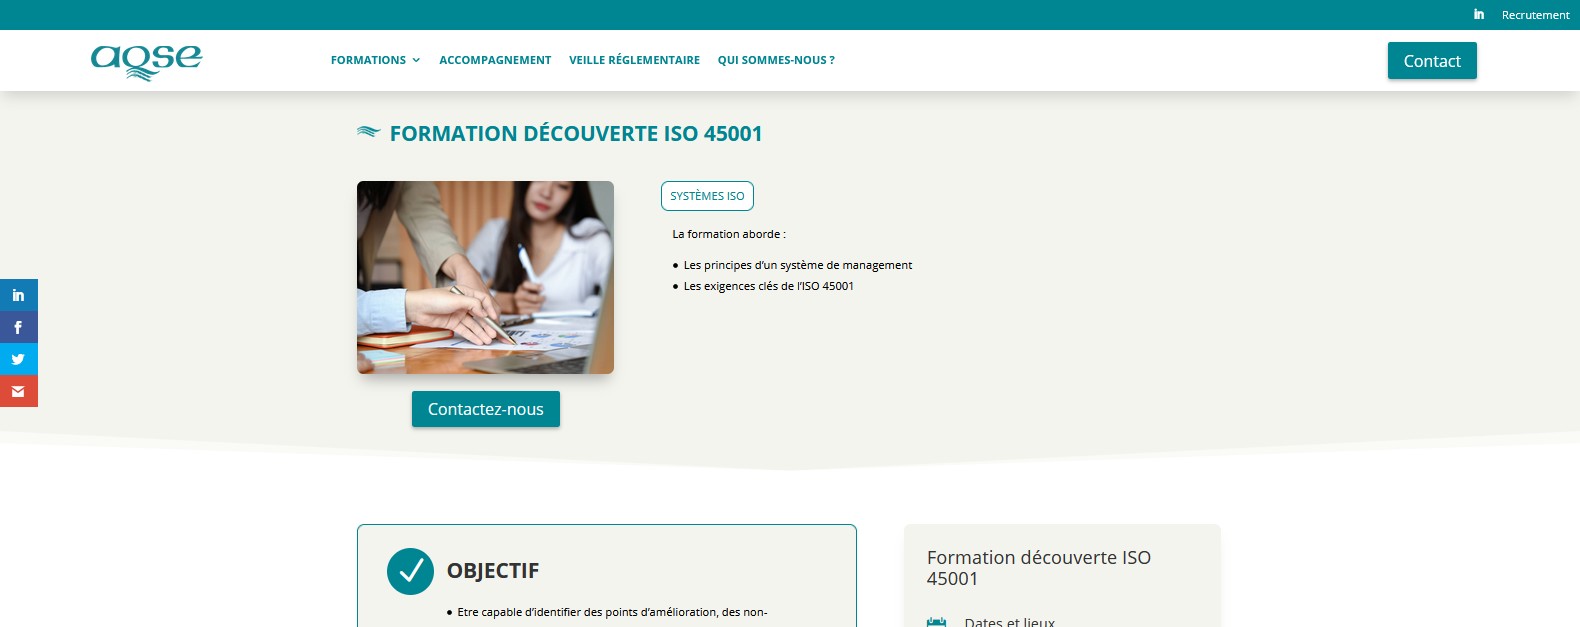 aqse-france.fr la formation ISO 45001 dcouverte